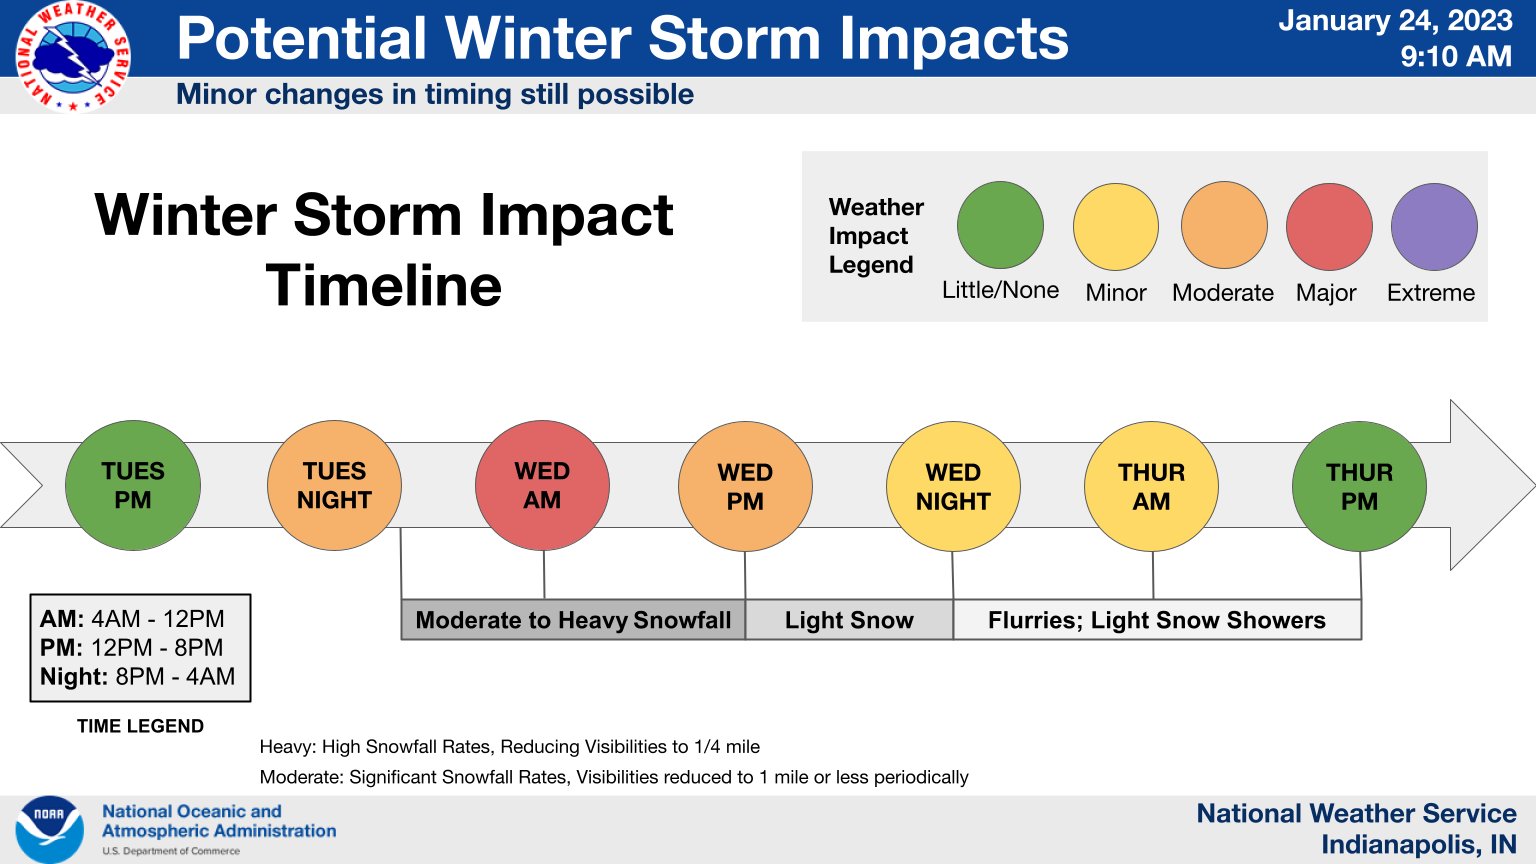 January 24, 2023, Indianapolis, Indiana Weather Forecast-Winter Storm Timeline